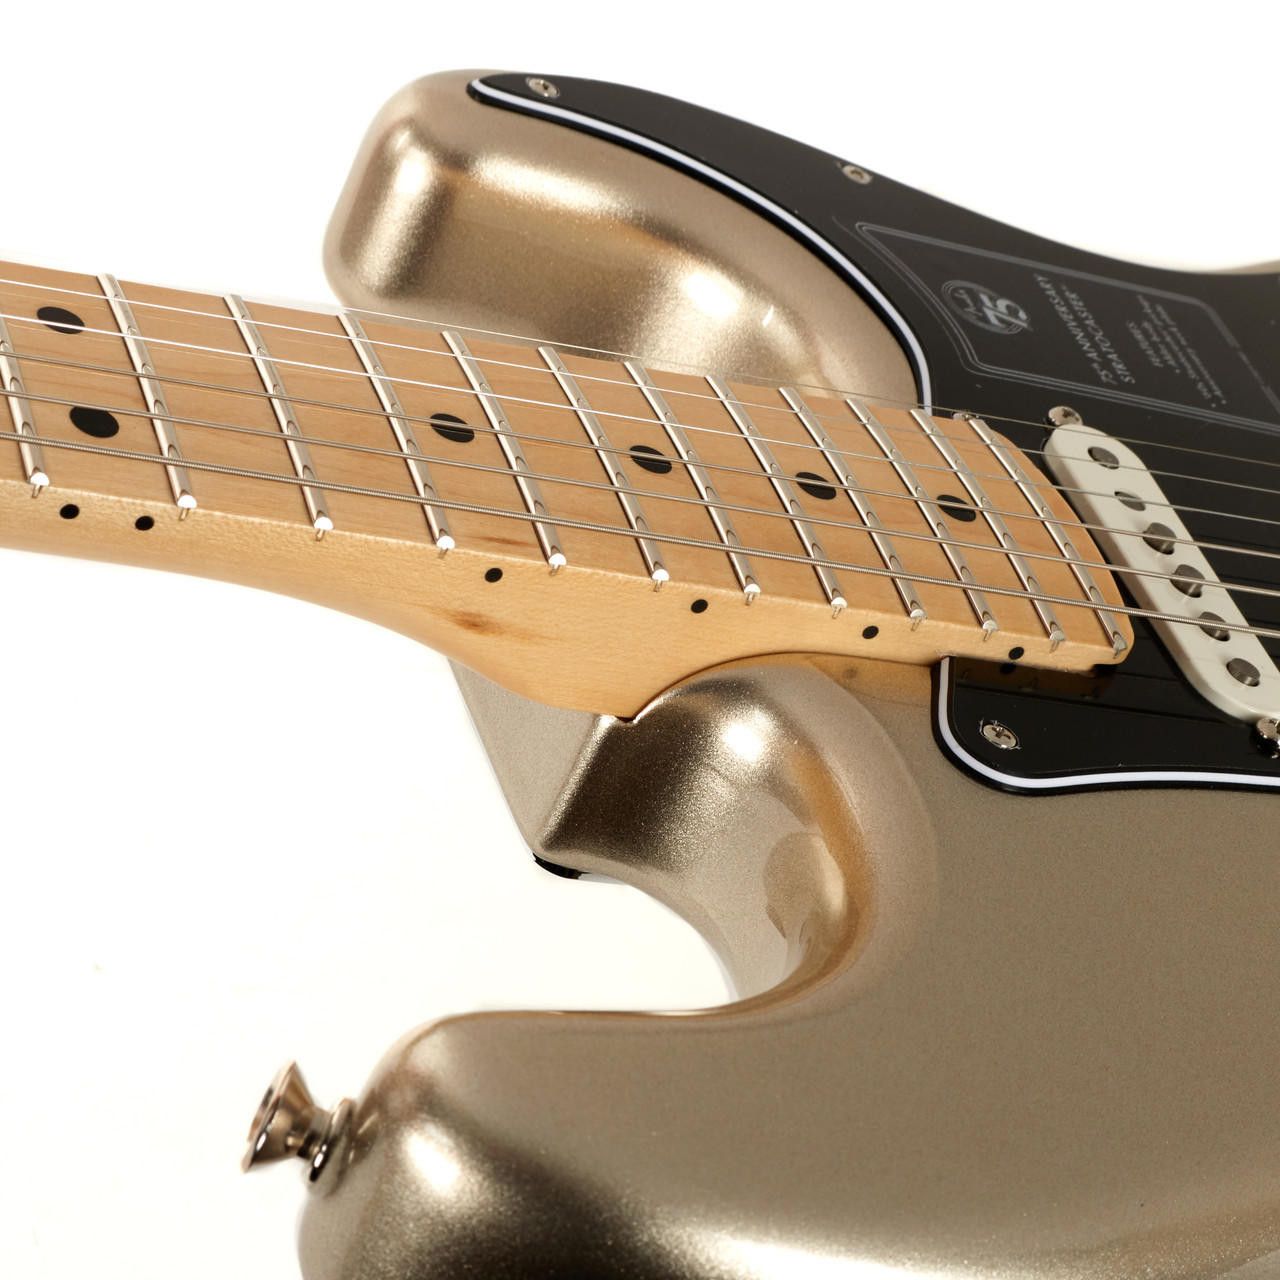 Spotlight: Fender 75th Anniversary Diamond Stratocaster and Platinum Telecaster